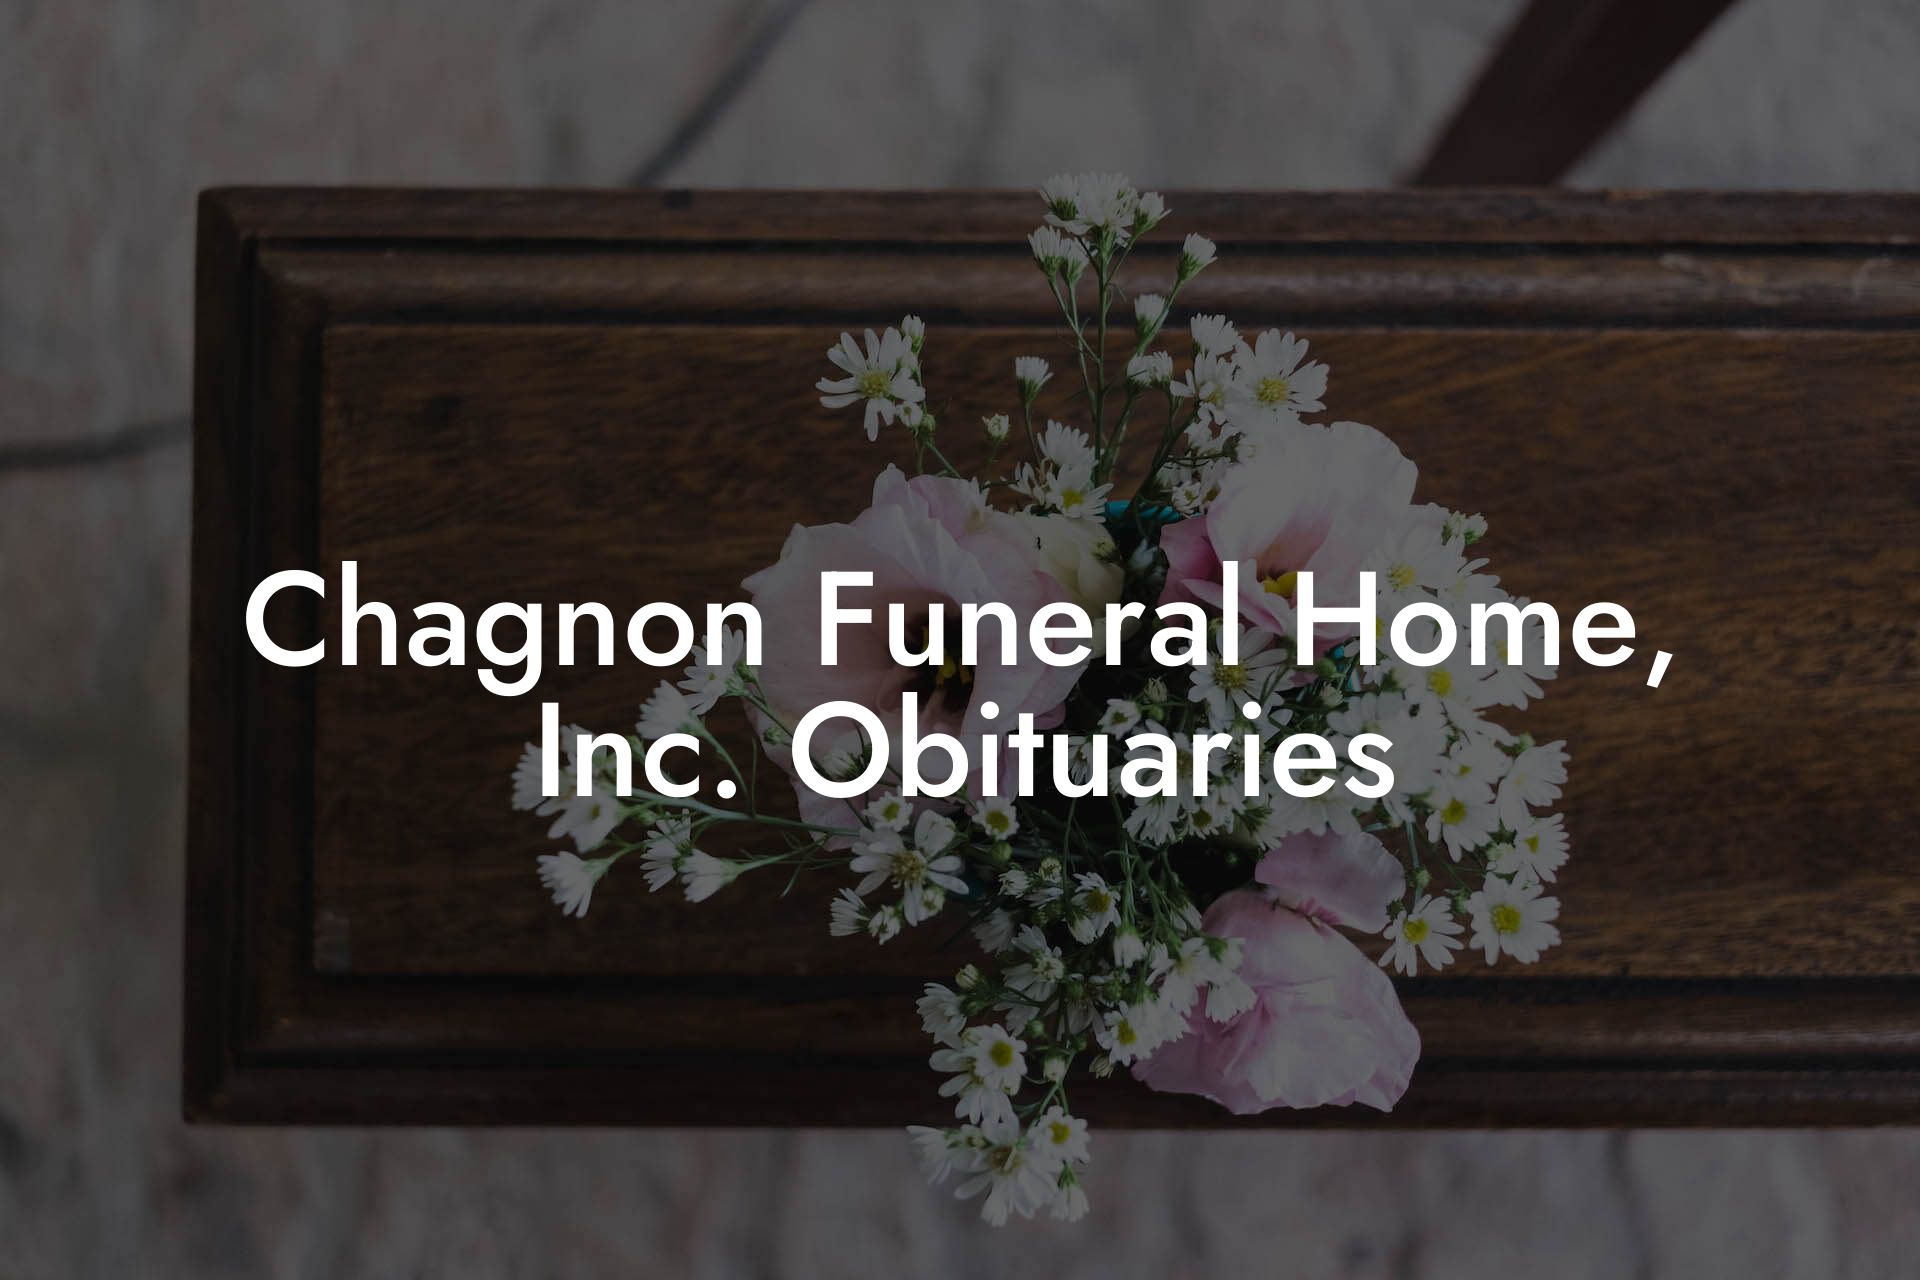 Chagnon Funeral Home, Inc. Obituaries